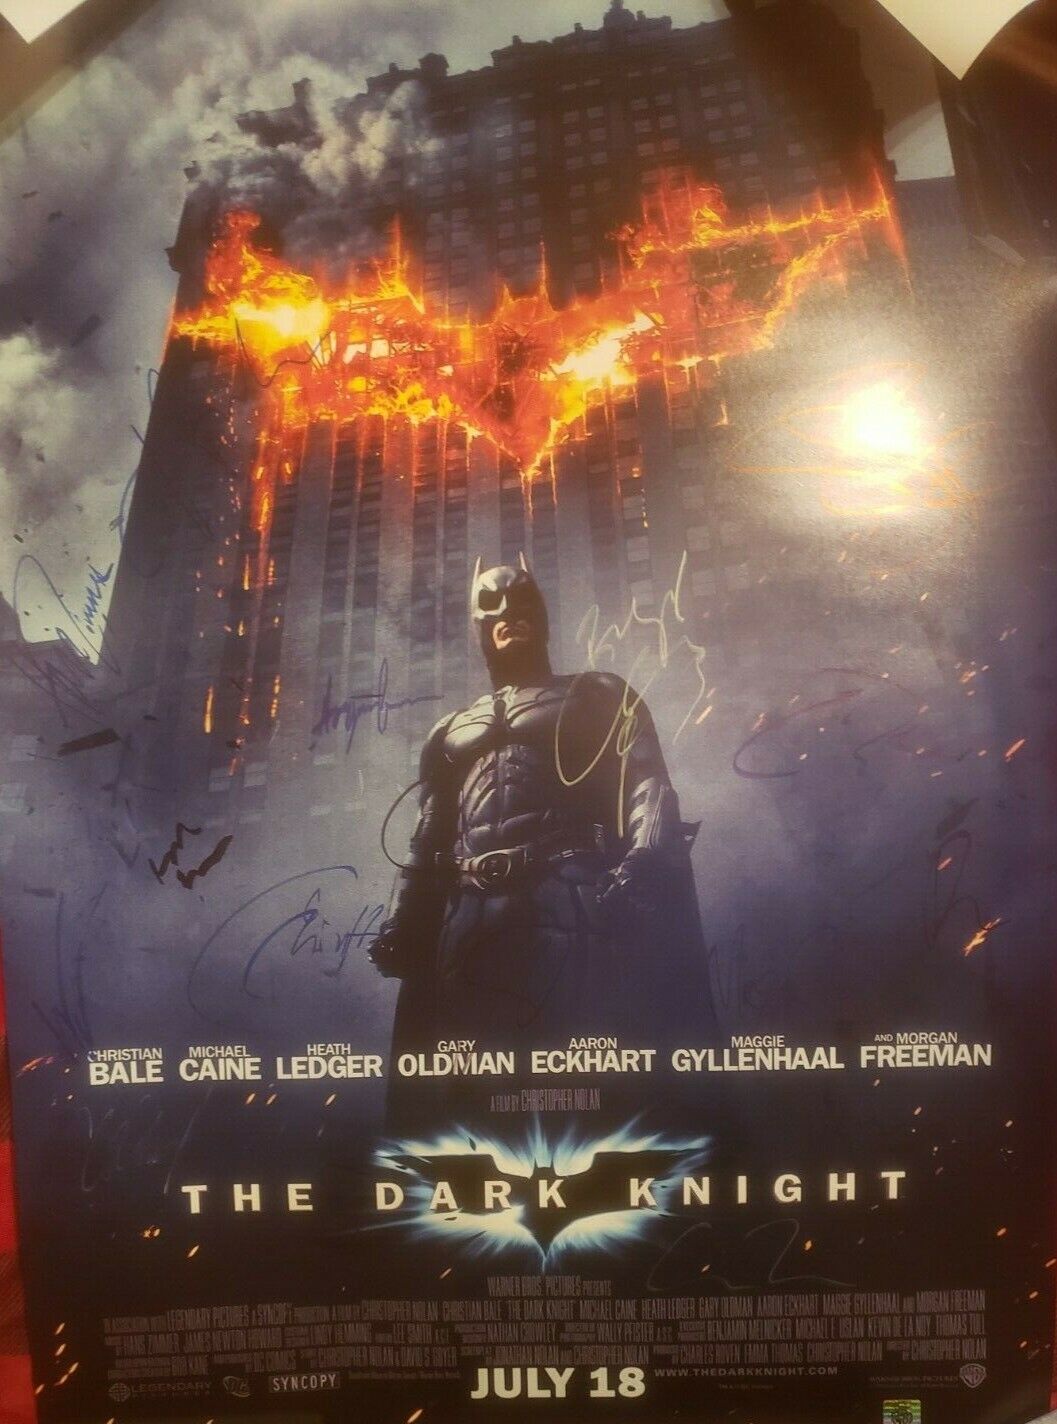 The Dark Knight Cast Signed Poster Christian Bale Christopher Nolan Heath Ledger